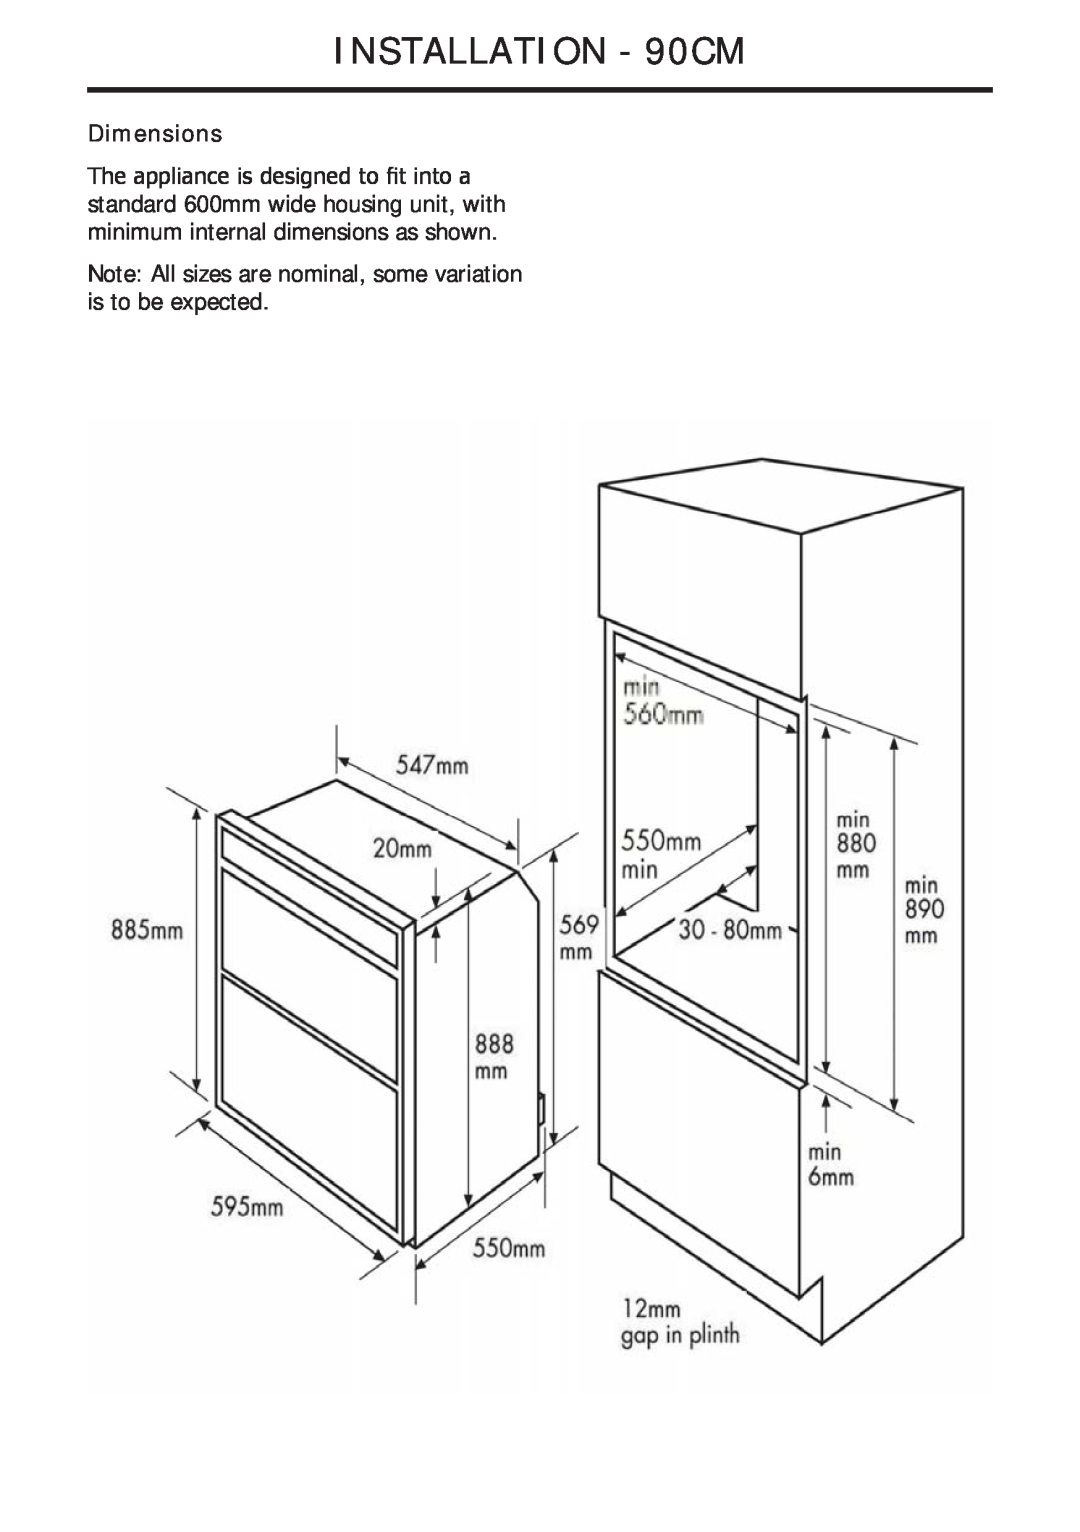 Glen Dimplex Home Appliances Ltd 82757900 manual INSTALLATION - 90CM, Dimensions 